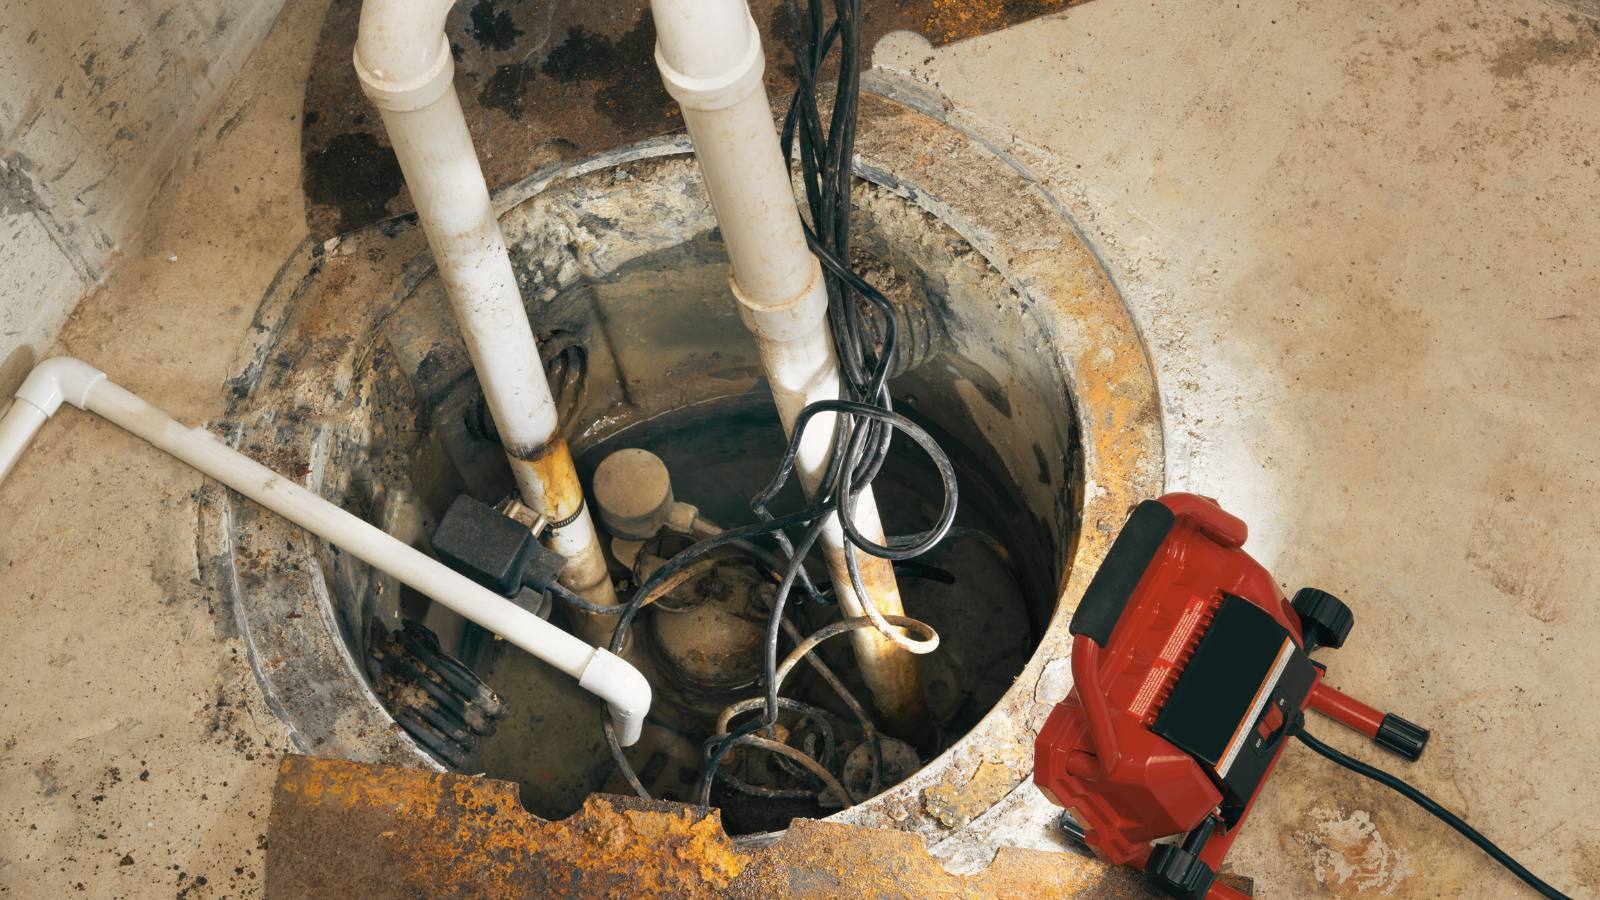 Repairing a Sump Pump in a Basement 